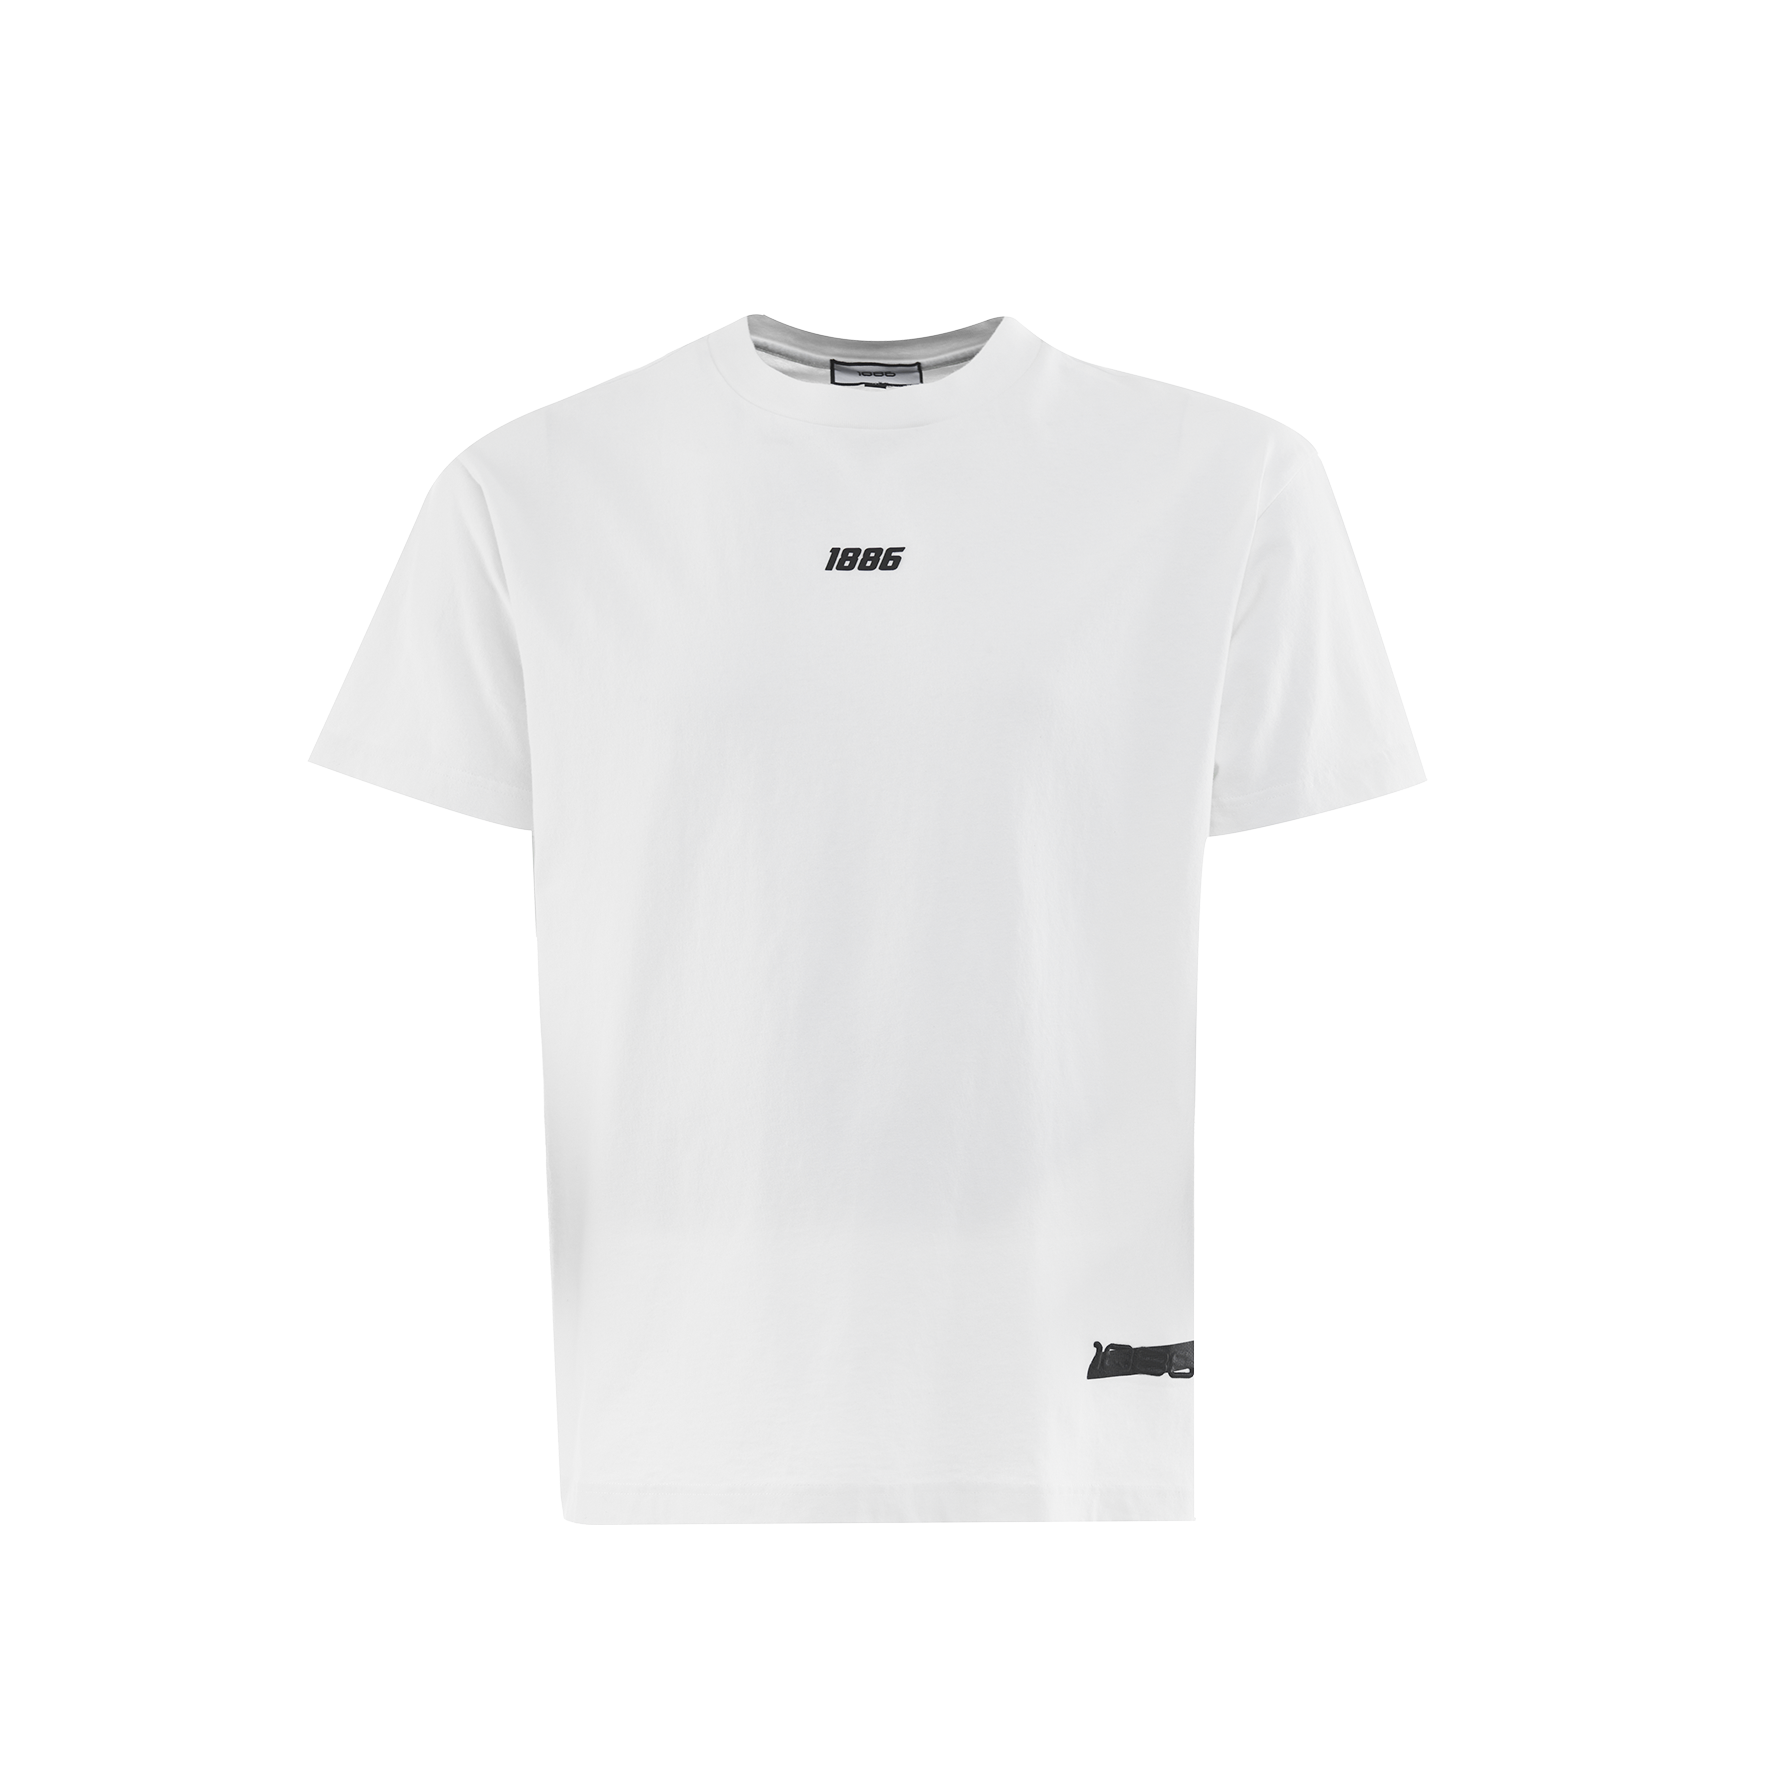 CLASSIC T - SHIRT WHITE – 1886 fashion